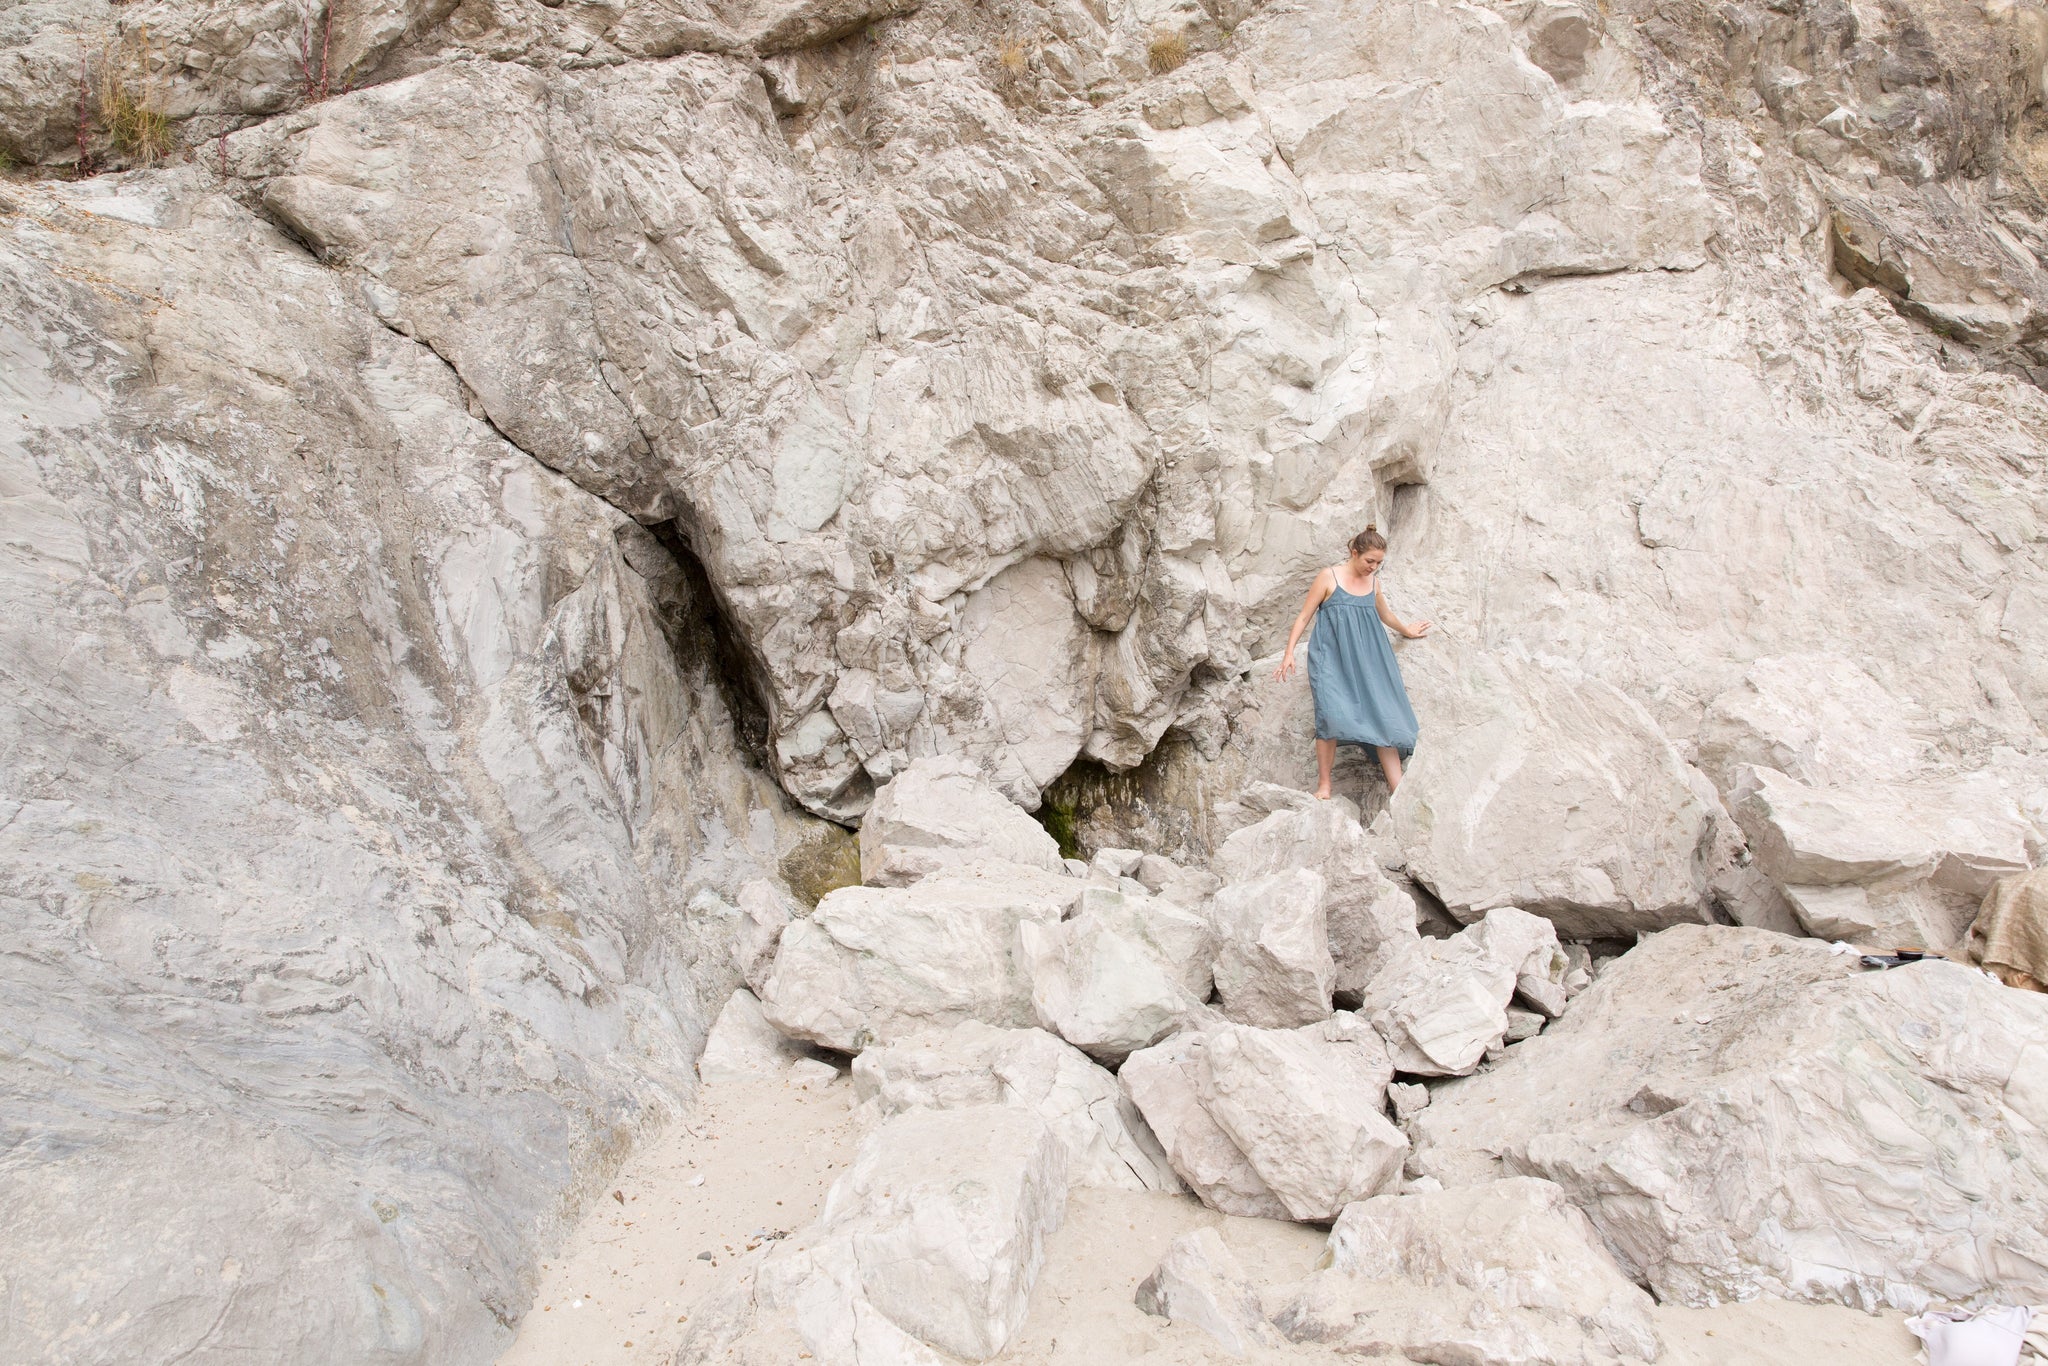 Portland musician, Hanna Haas, climbing on cliffs in CP Shades dress